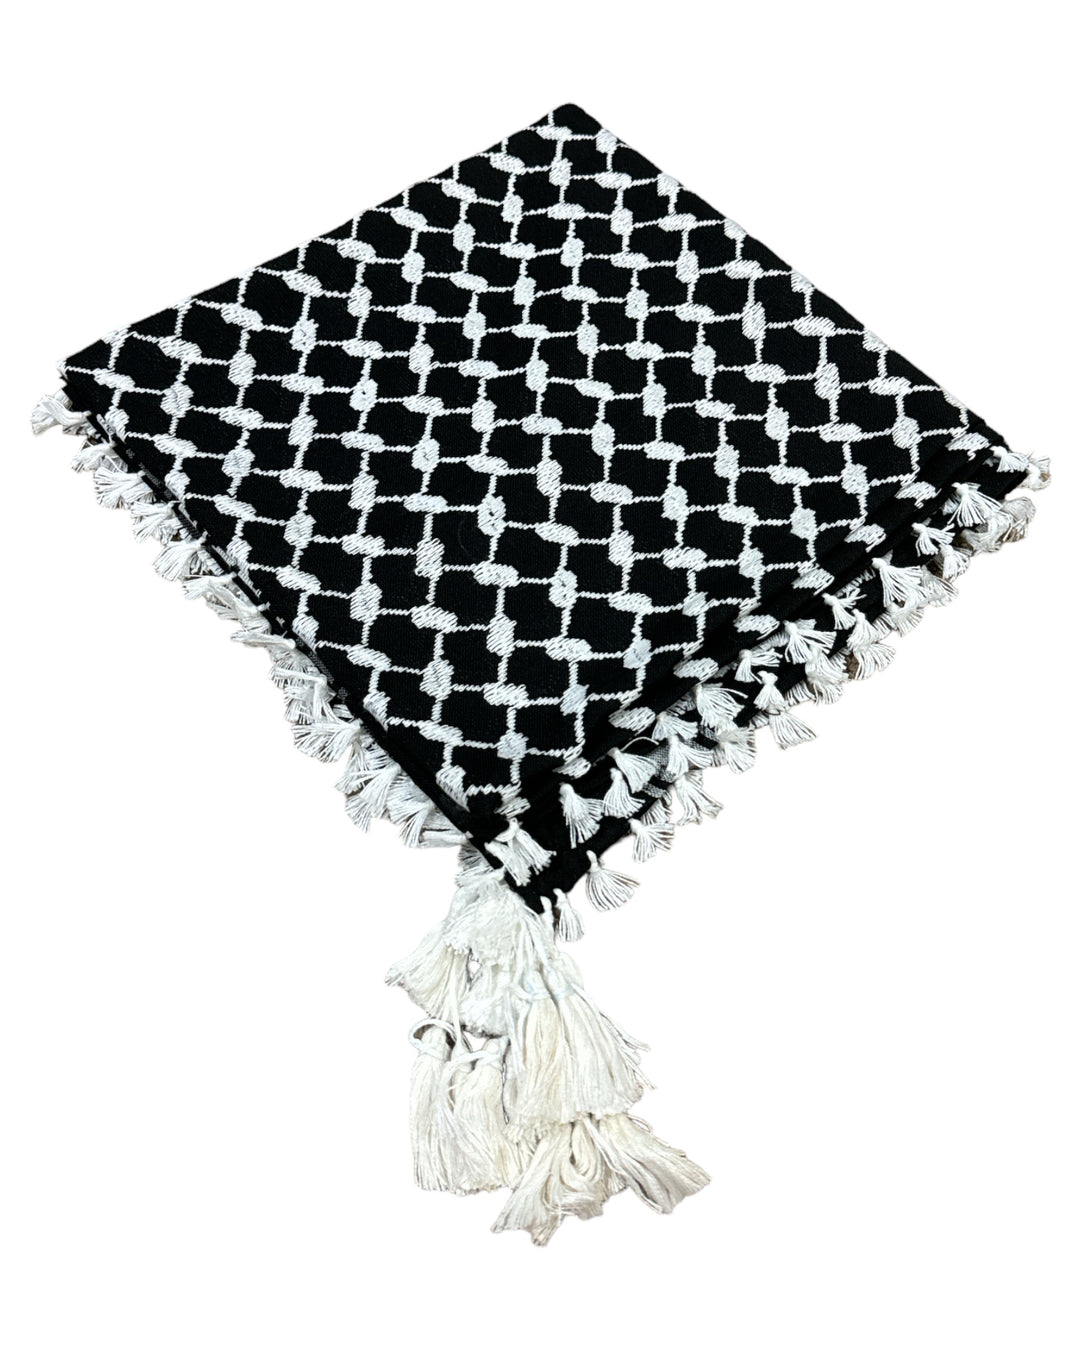 PALESTINE'S SYMBOLIC SHAMI black and white PATTERN DESIGN WITH BRAIDS ZUHD SHEMAG 50